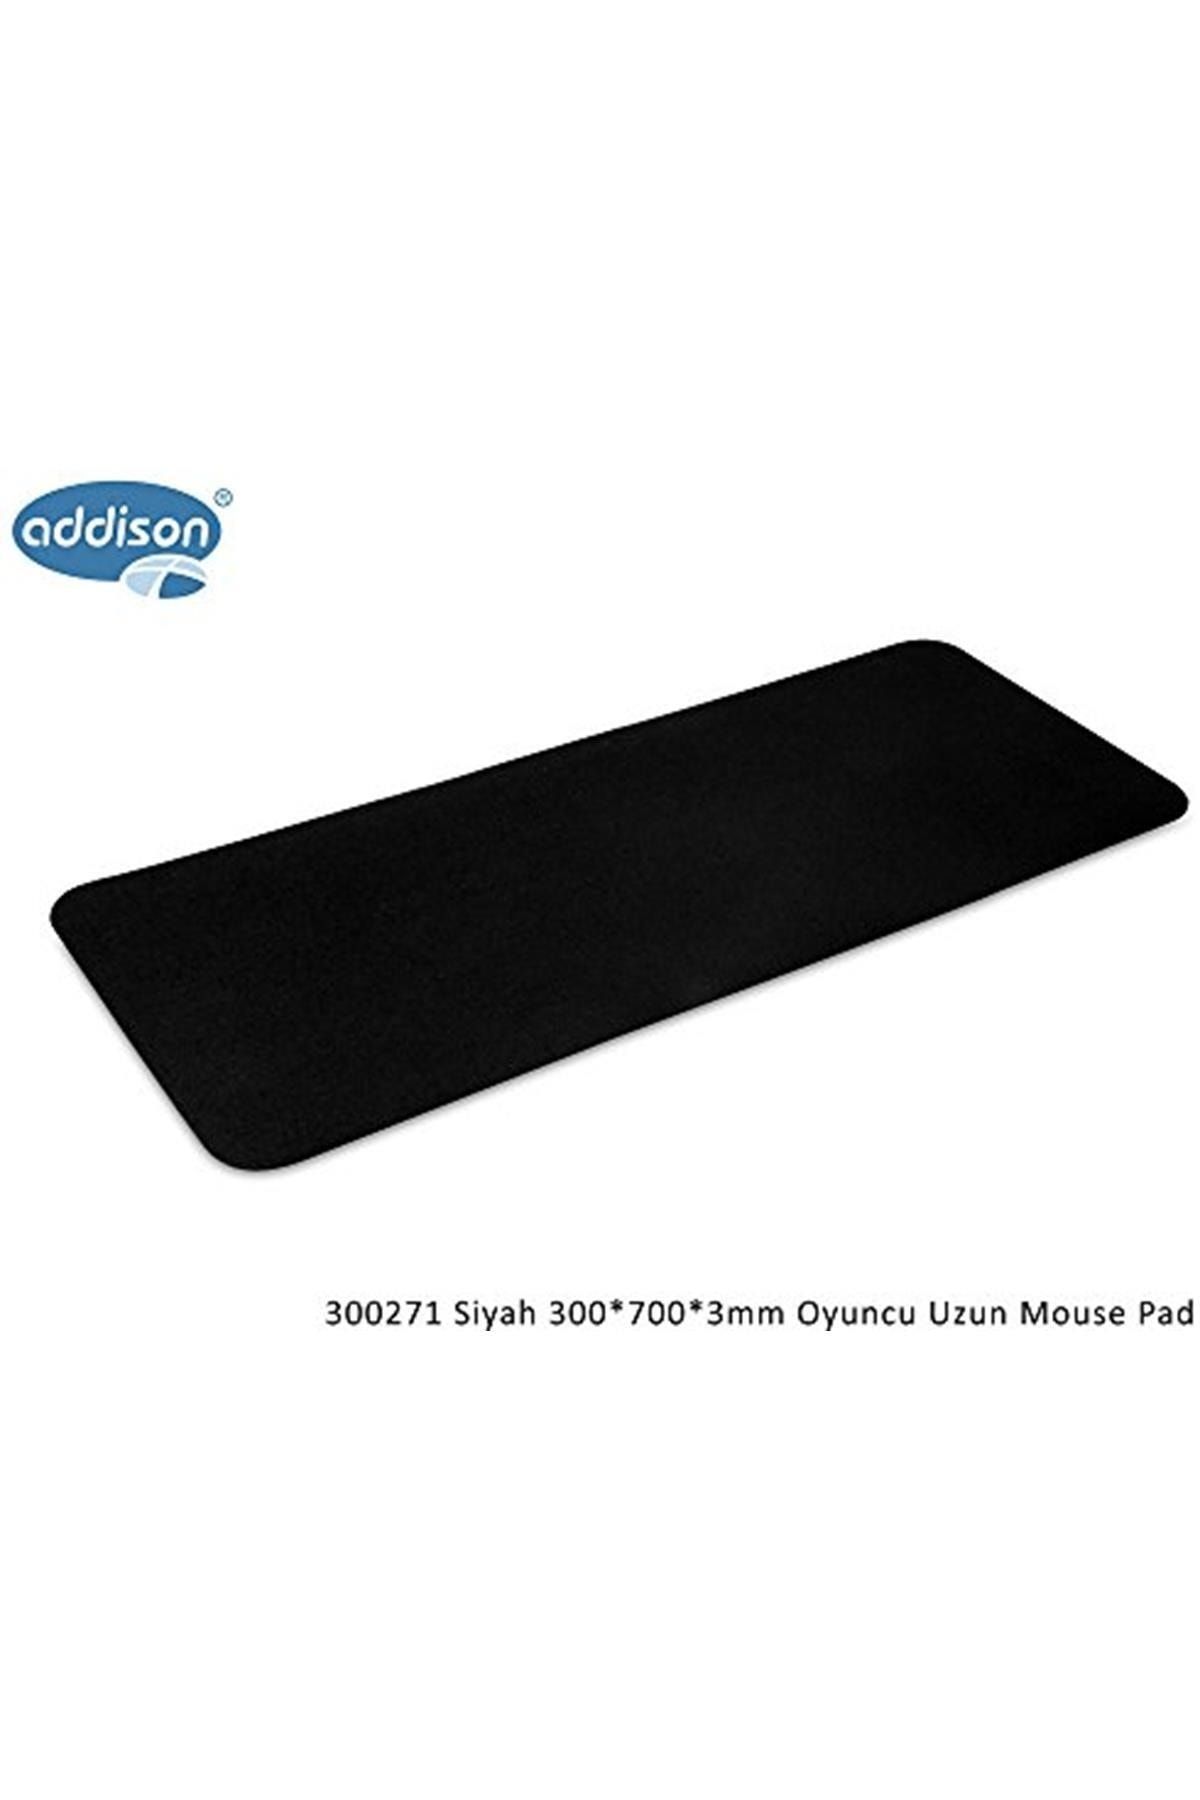 Addison Marka: Addison 300271 Siyah 300*700*3mm Oyuncu Uzun Mouse Pad Kategori: Mouse